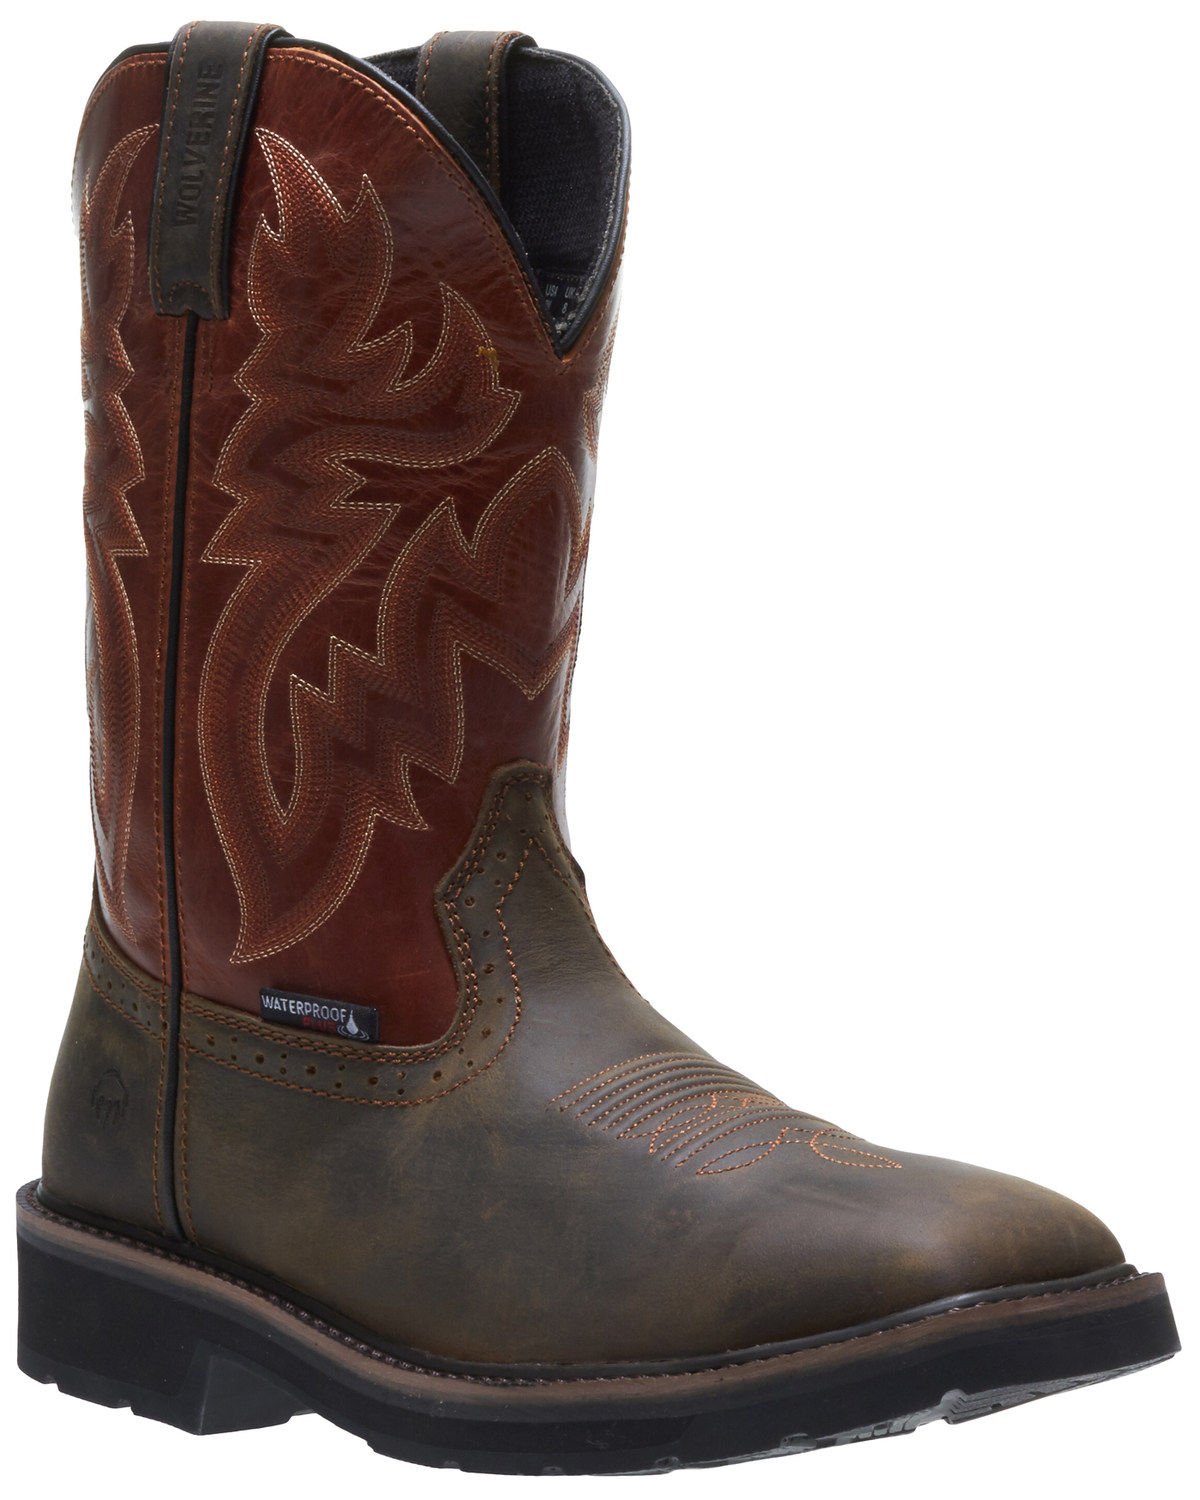 Wolverine Men's Rancher Waterproof Western Work Boots - Steel Toe